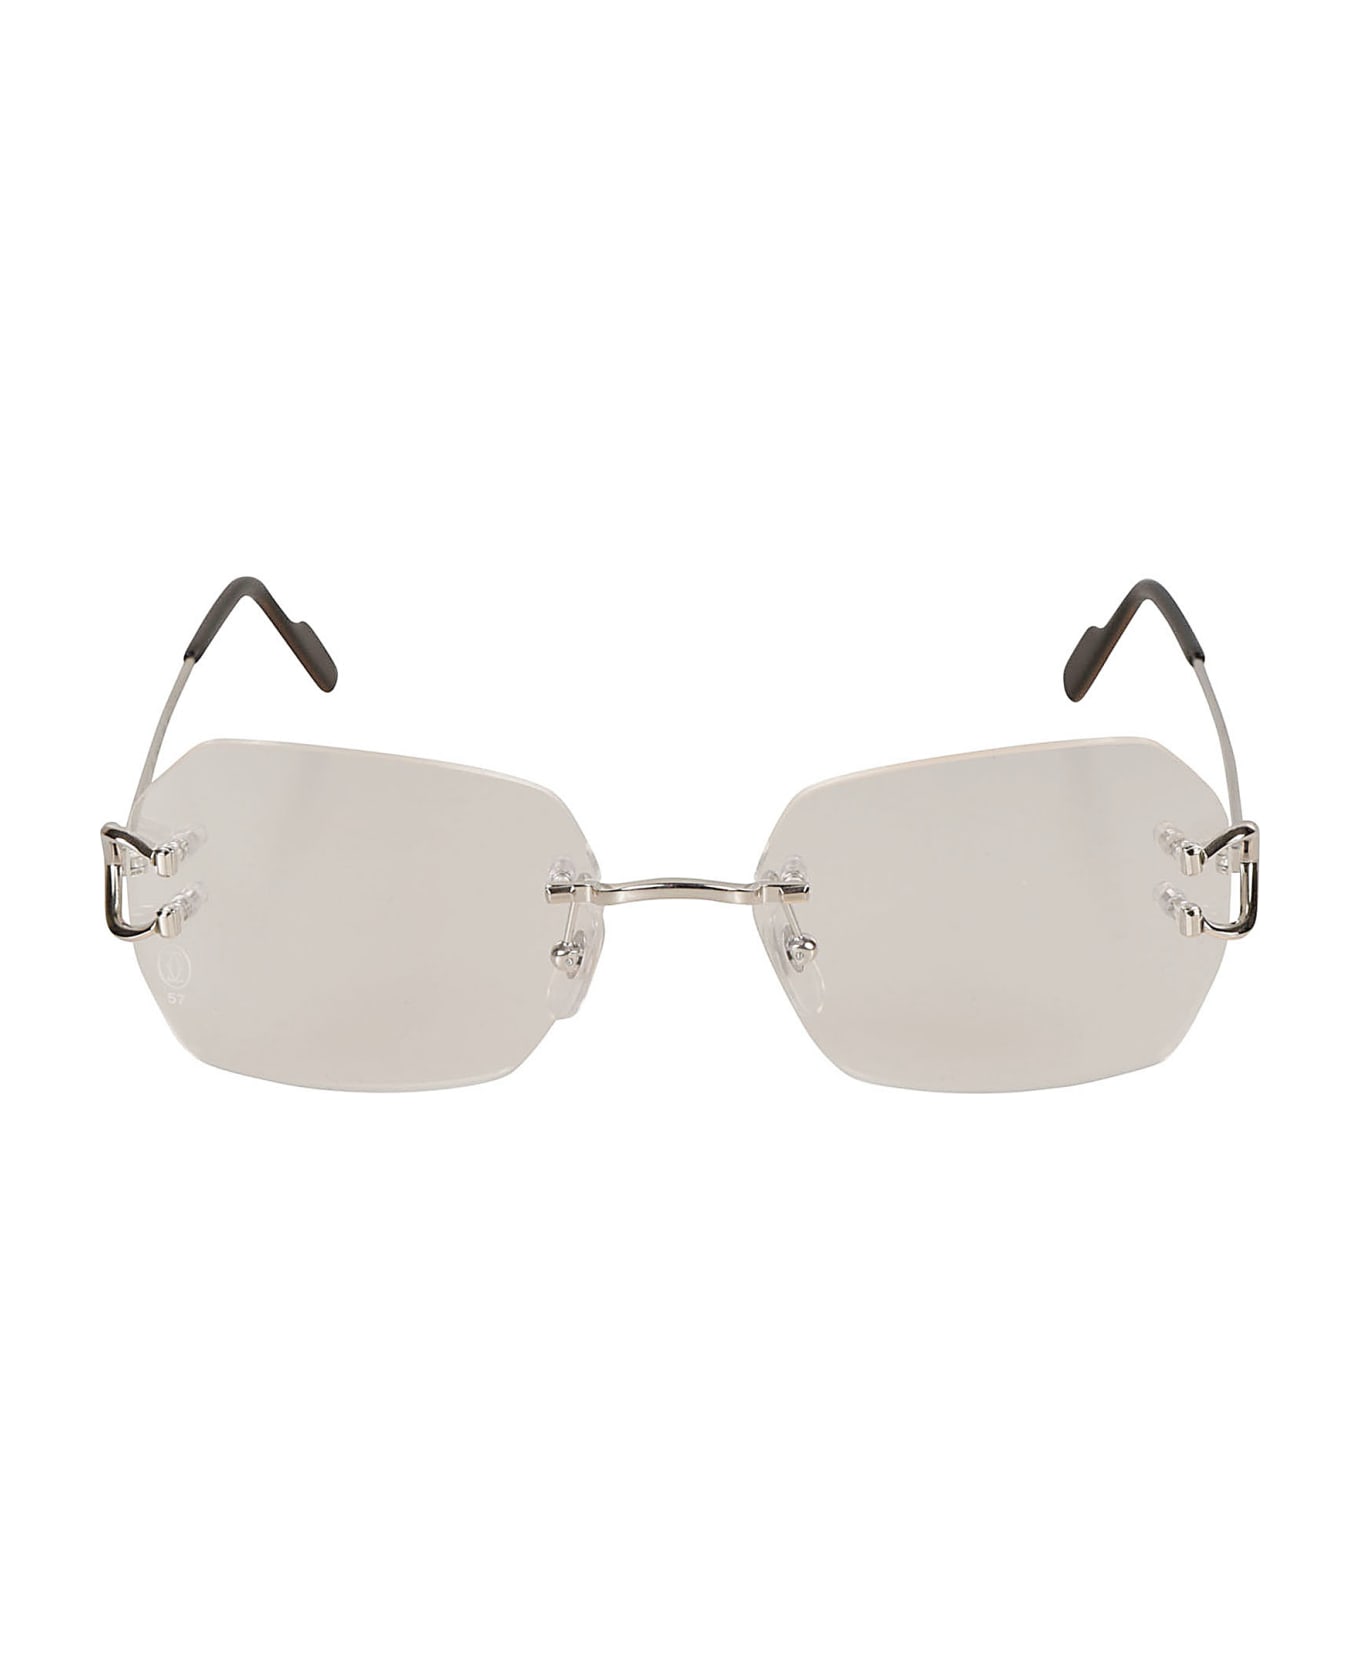 Cartier Eyewear Square Frame Glasses - Silver アイウェア